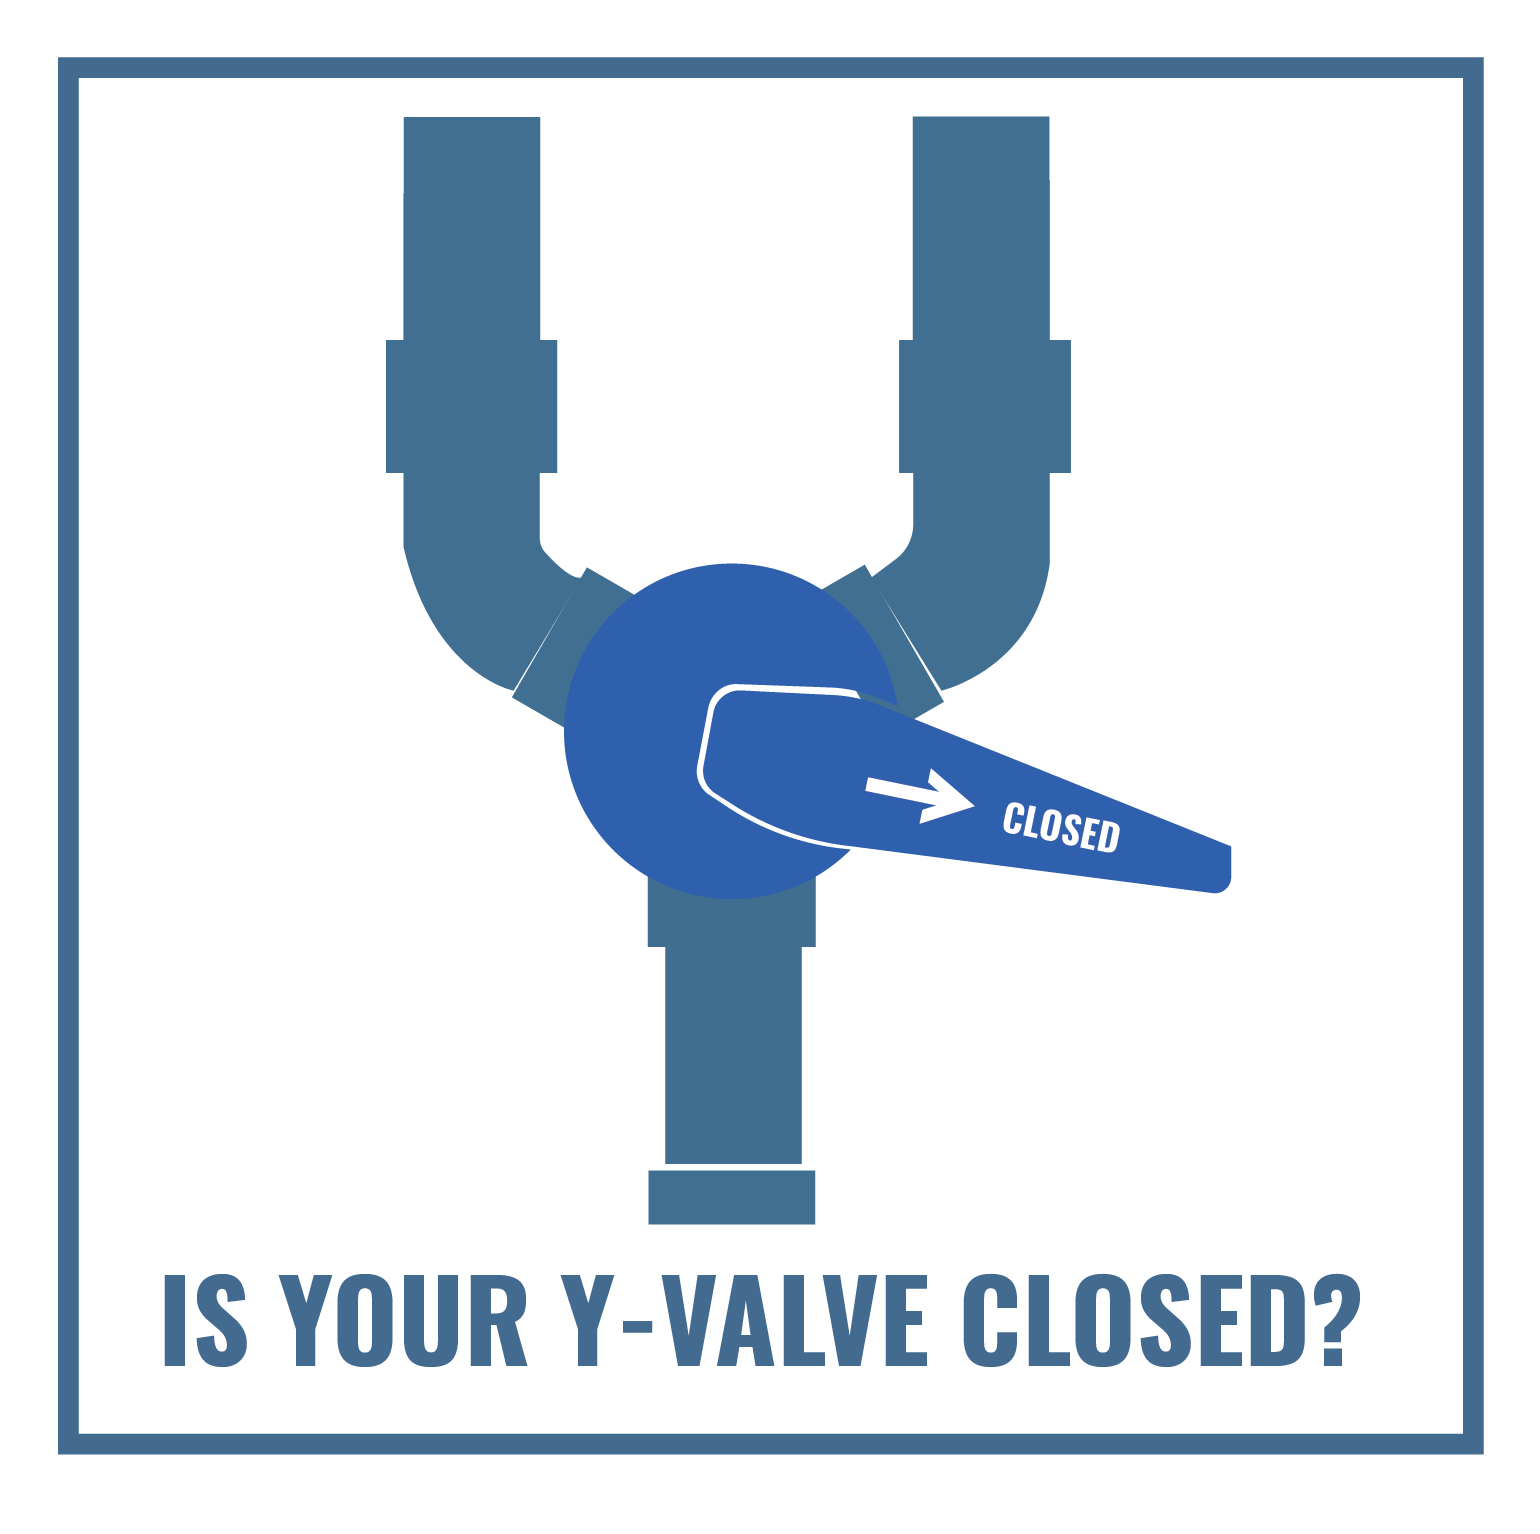 A graphic image of a Y-Valve